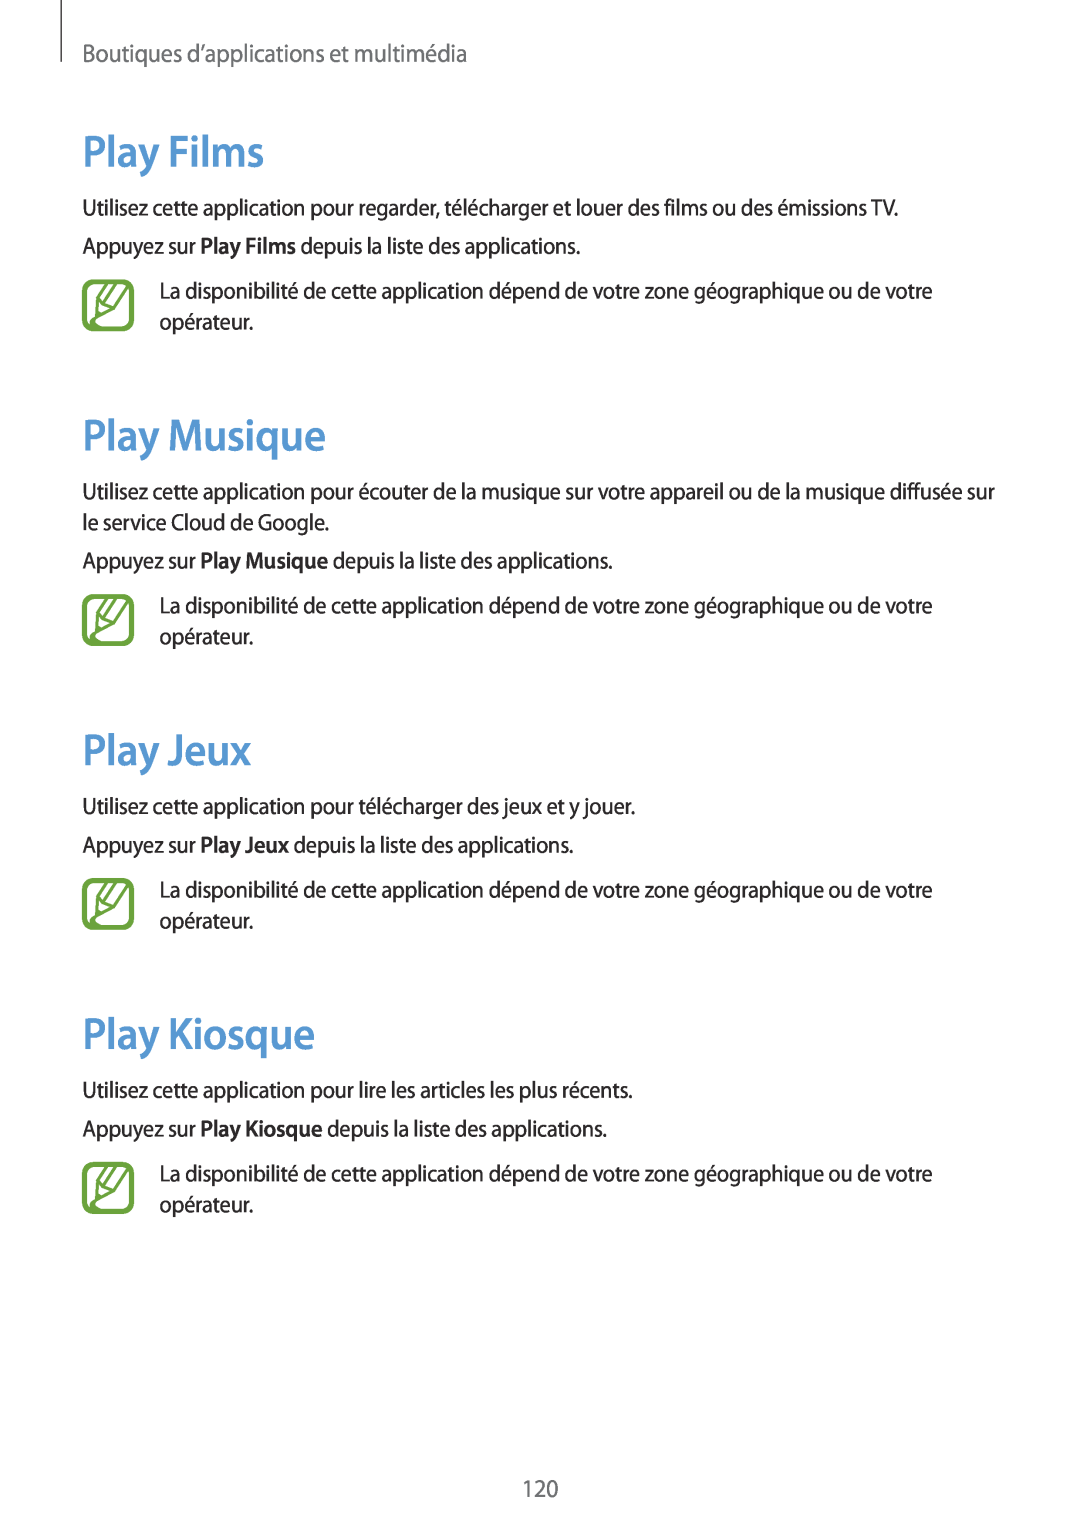 Samsung SM-P9050ZWAXEF manual Play Films, Play Musique, Play Jeux, Play Kiosque, Boutiques d’applications et multimédia 